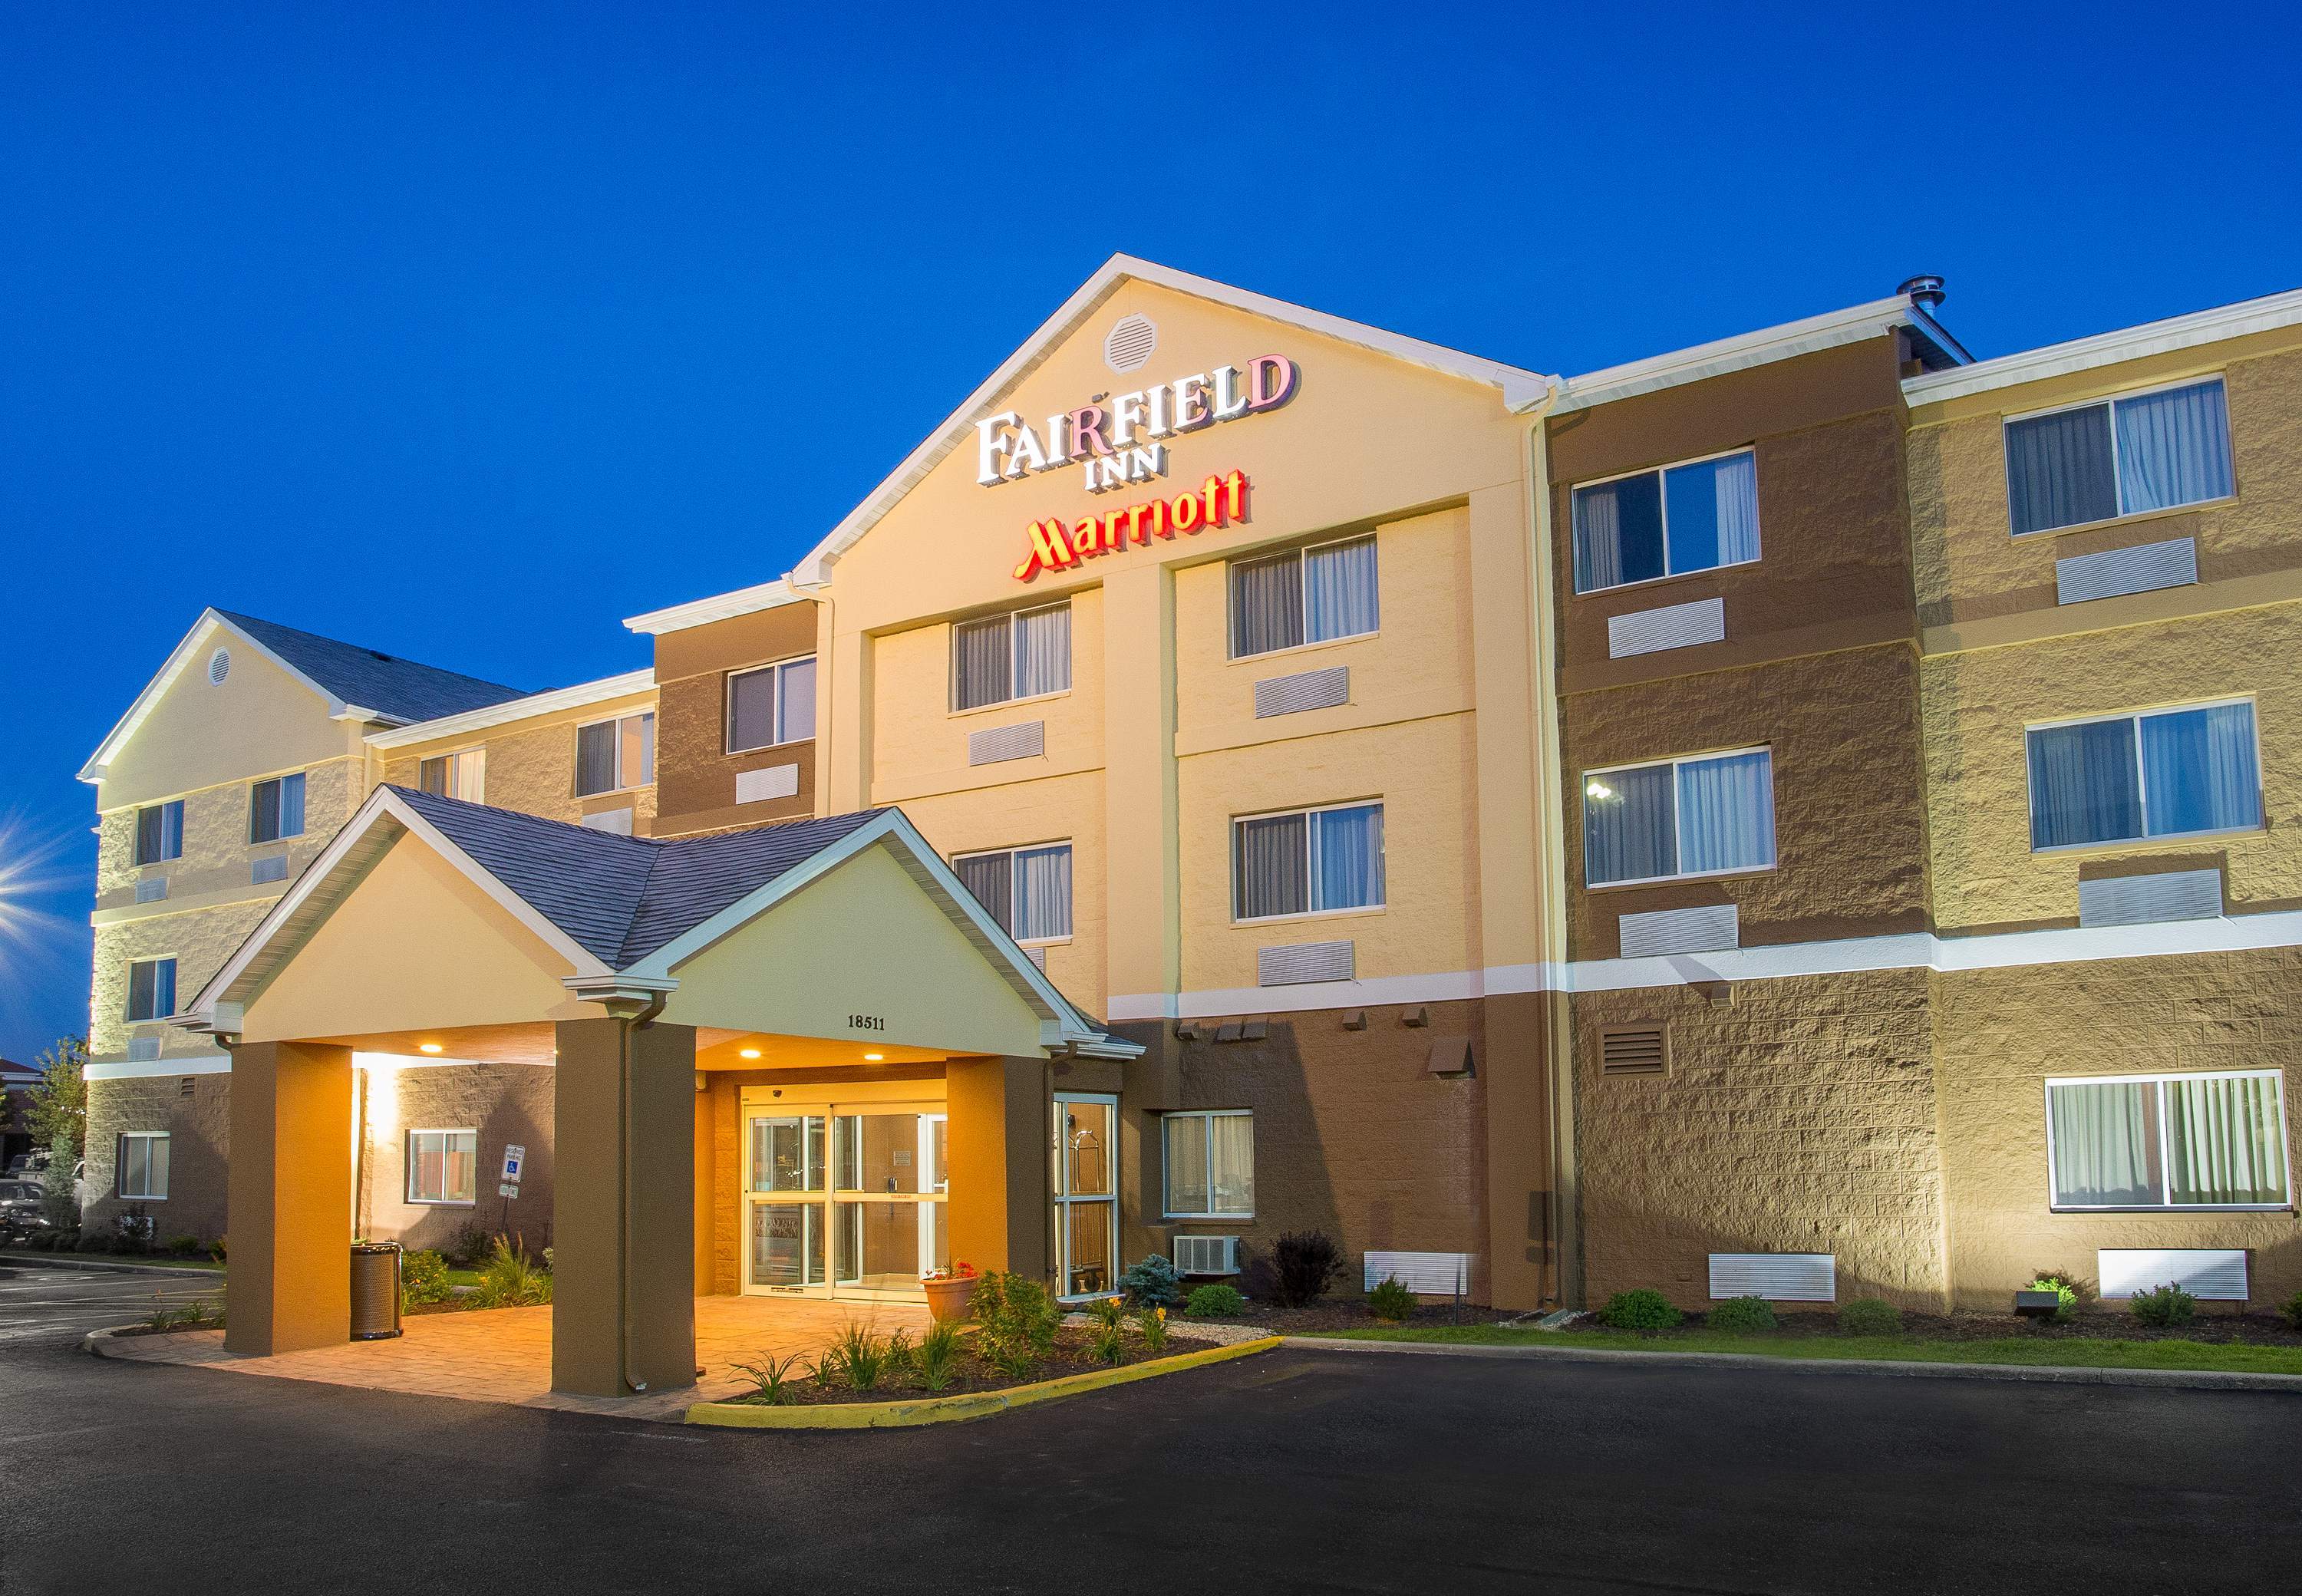 Photo of Fairfield Inn & Suites by Marriott Chicago Tinley Park, Tinley Park, IL